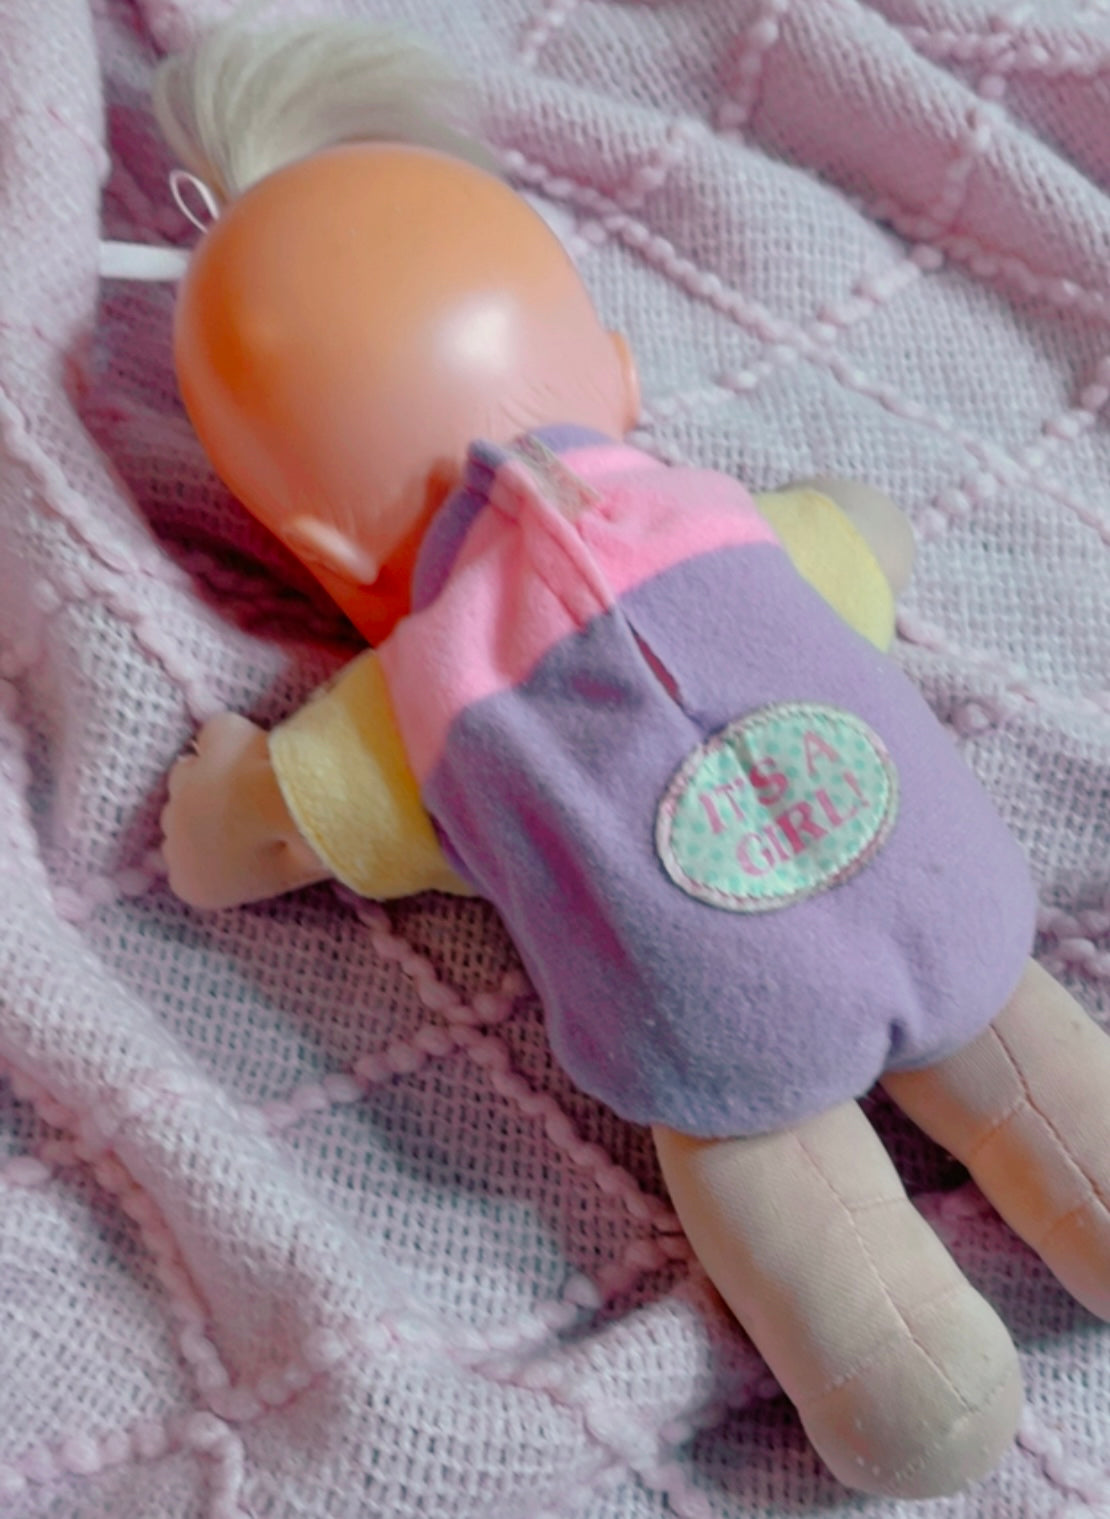 Magic Nursery Baby toy 1992